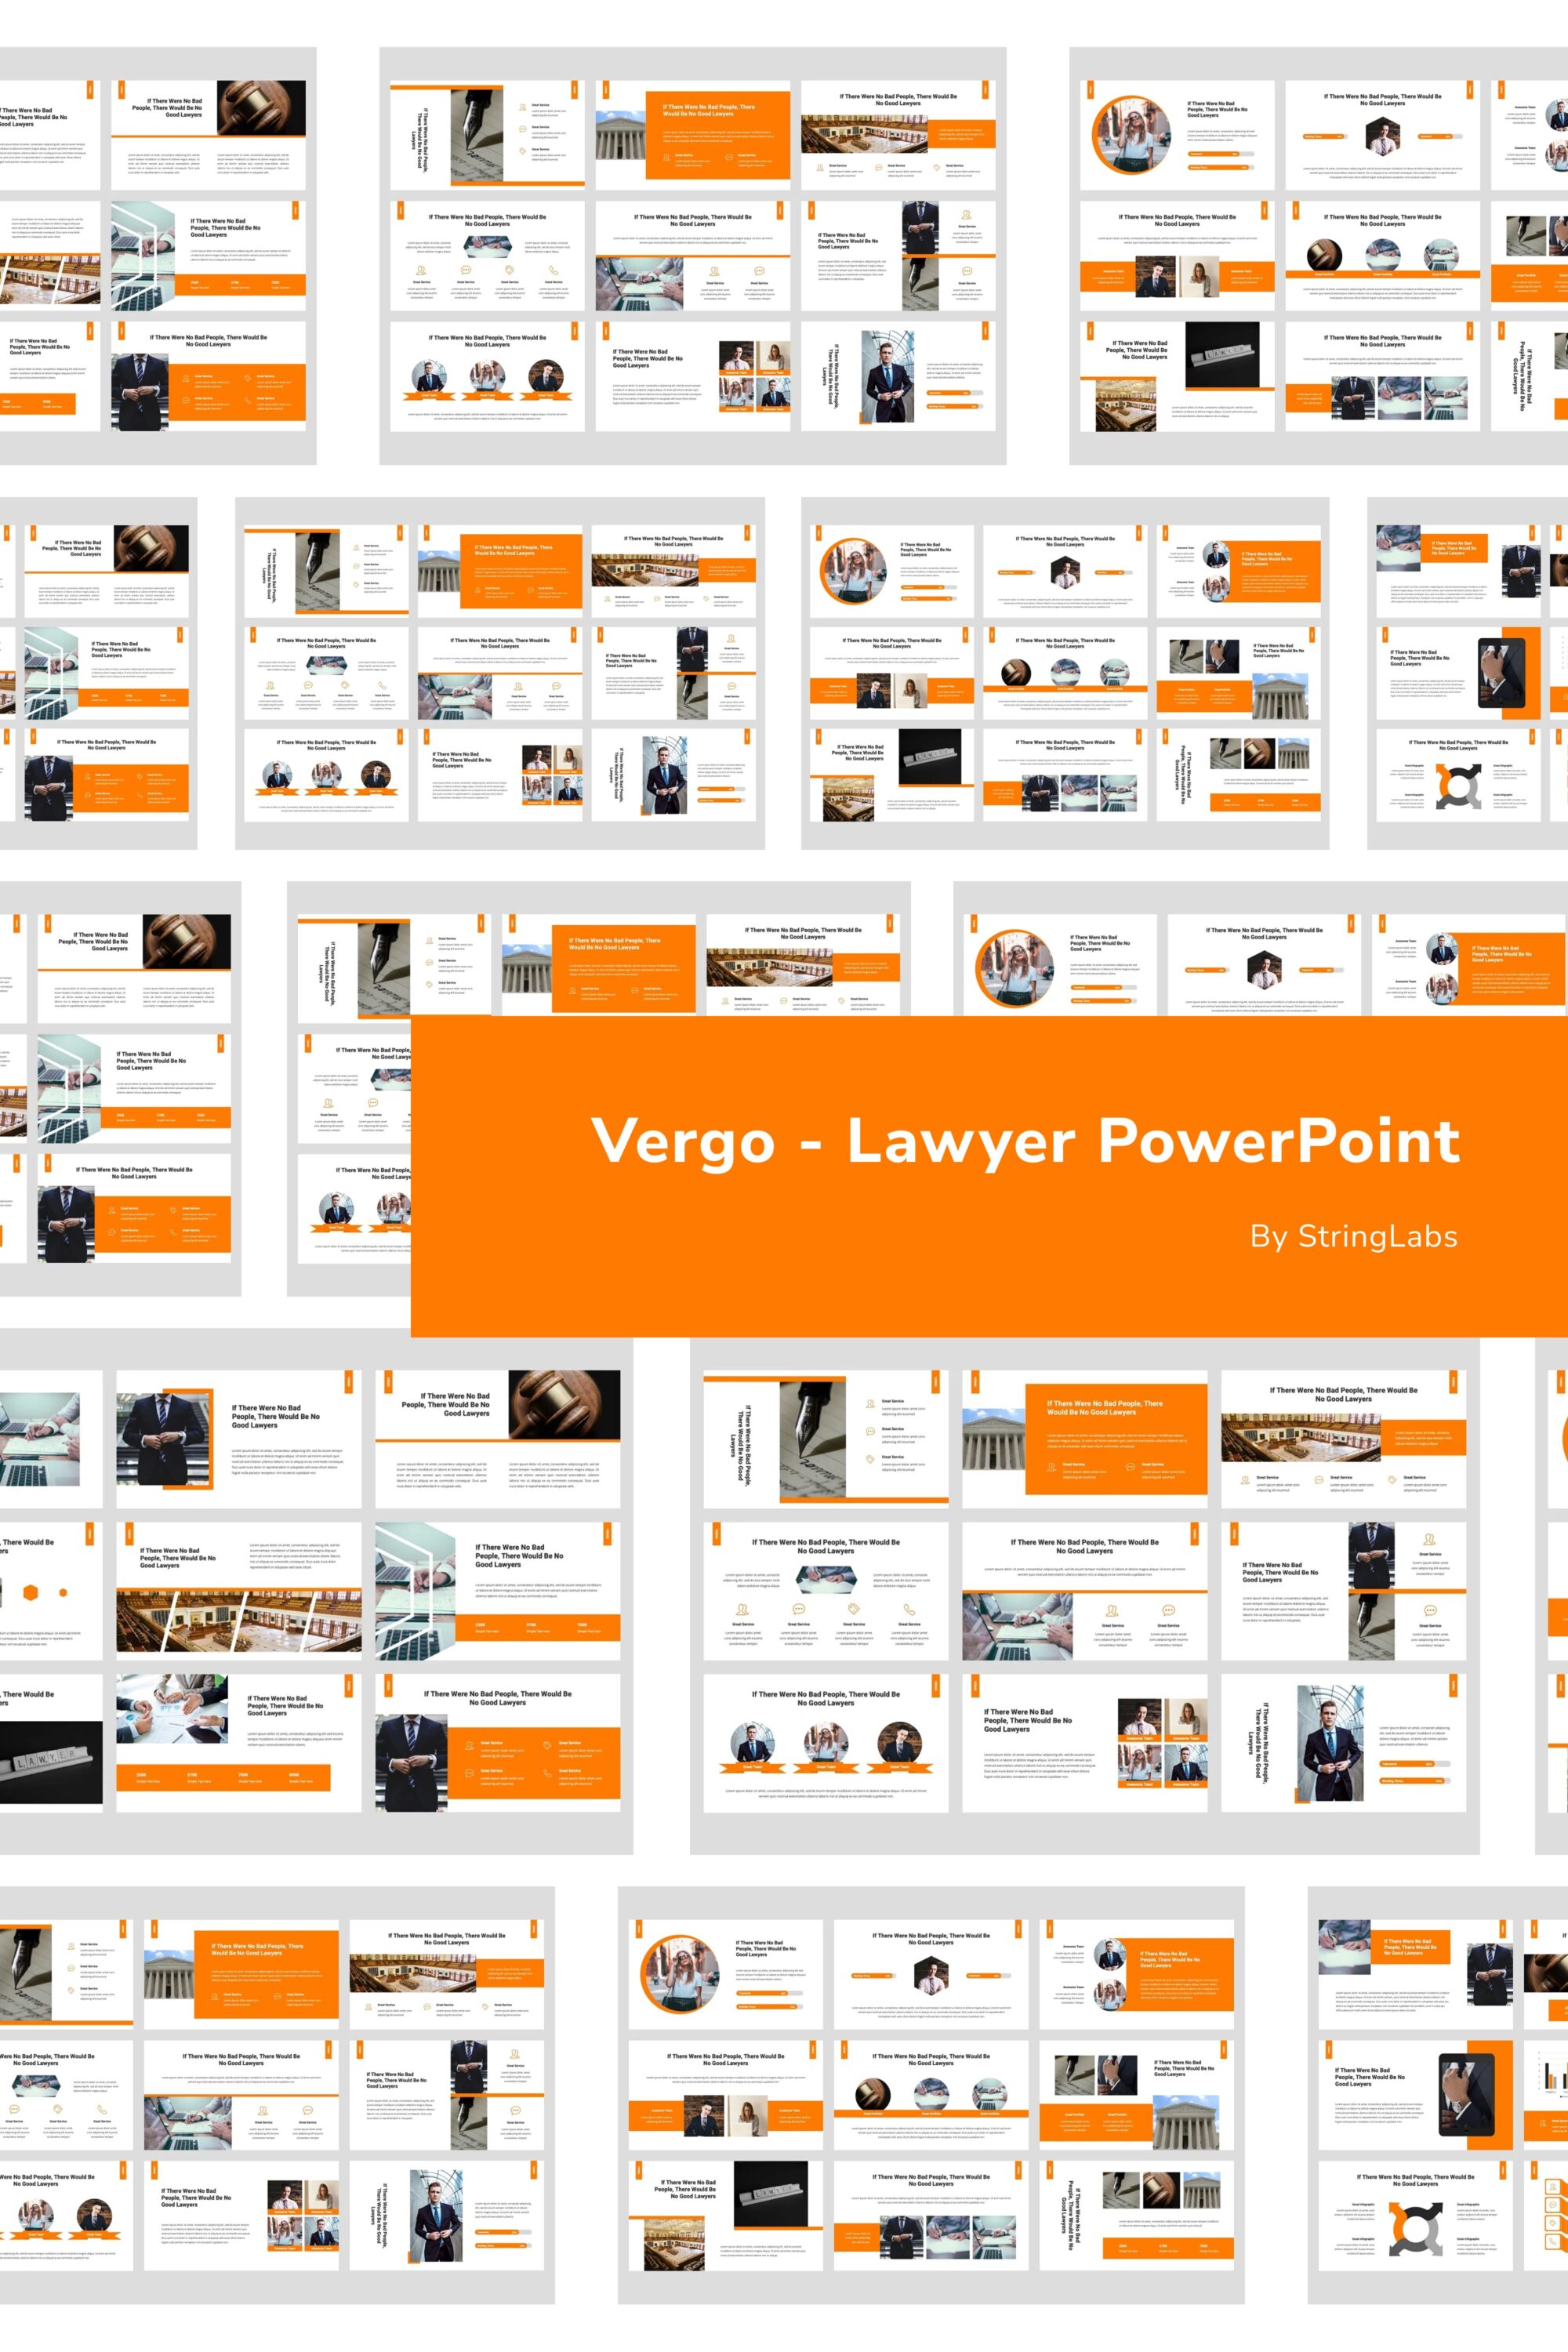 Vergo Lawyer Powerpoint 06.